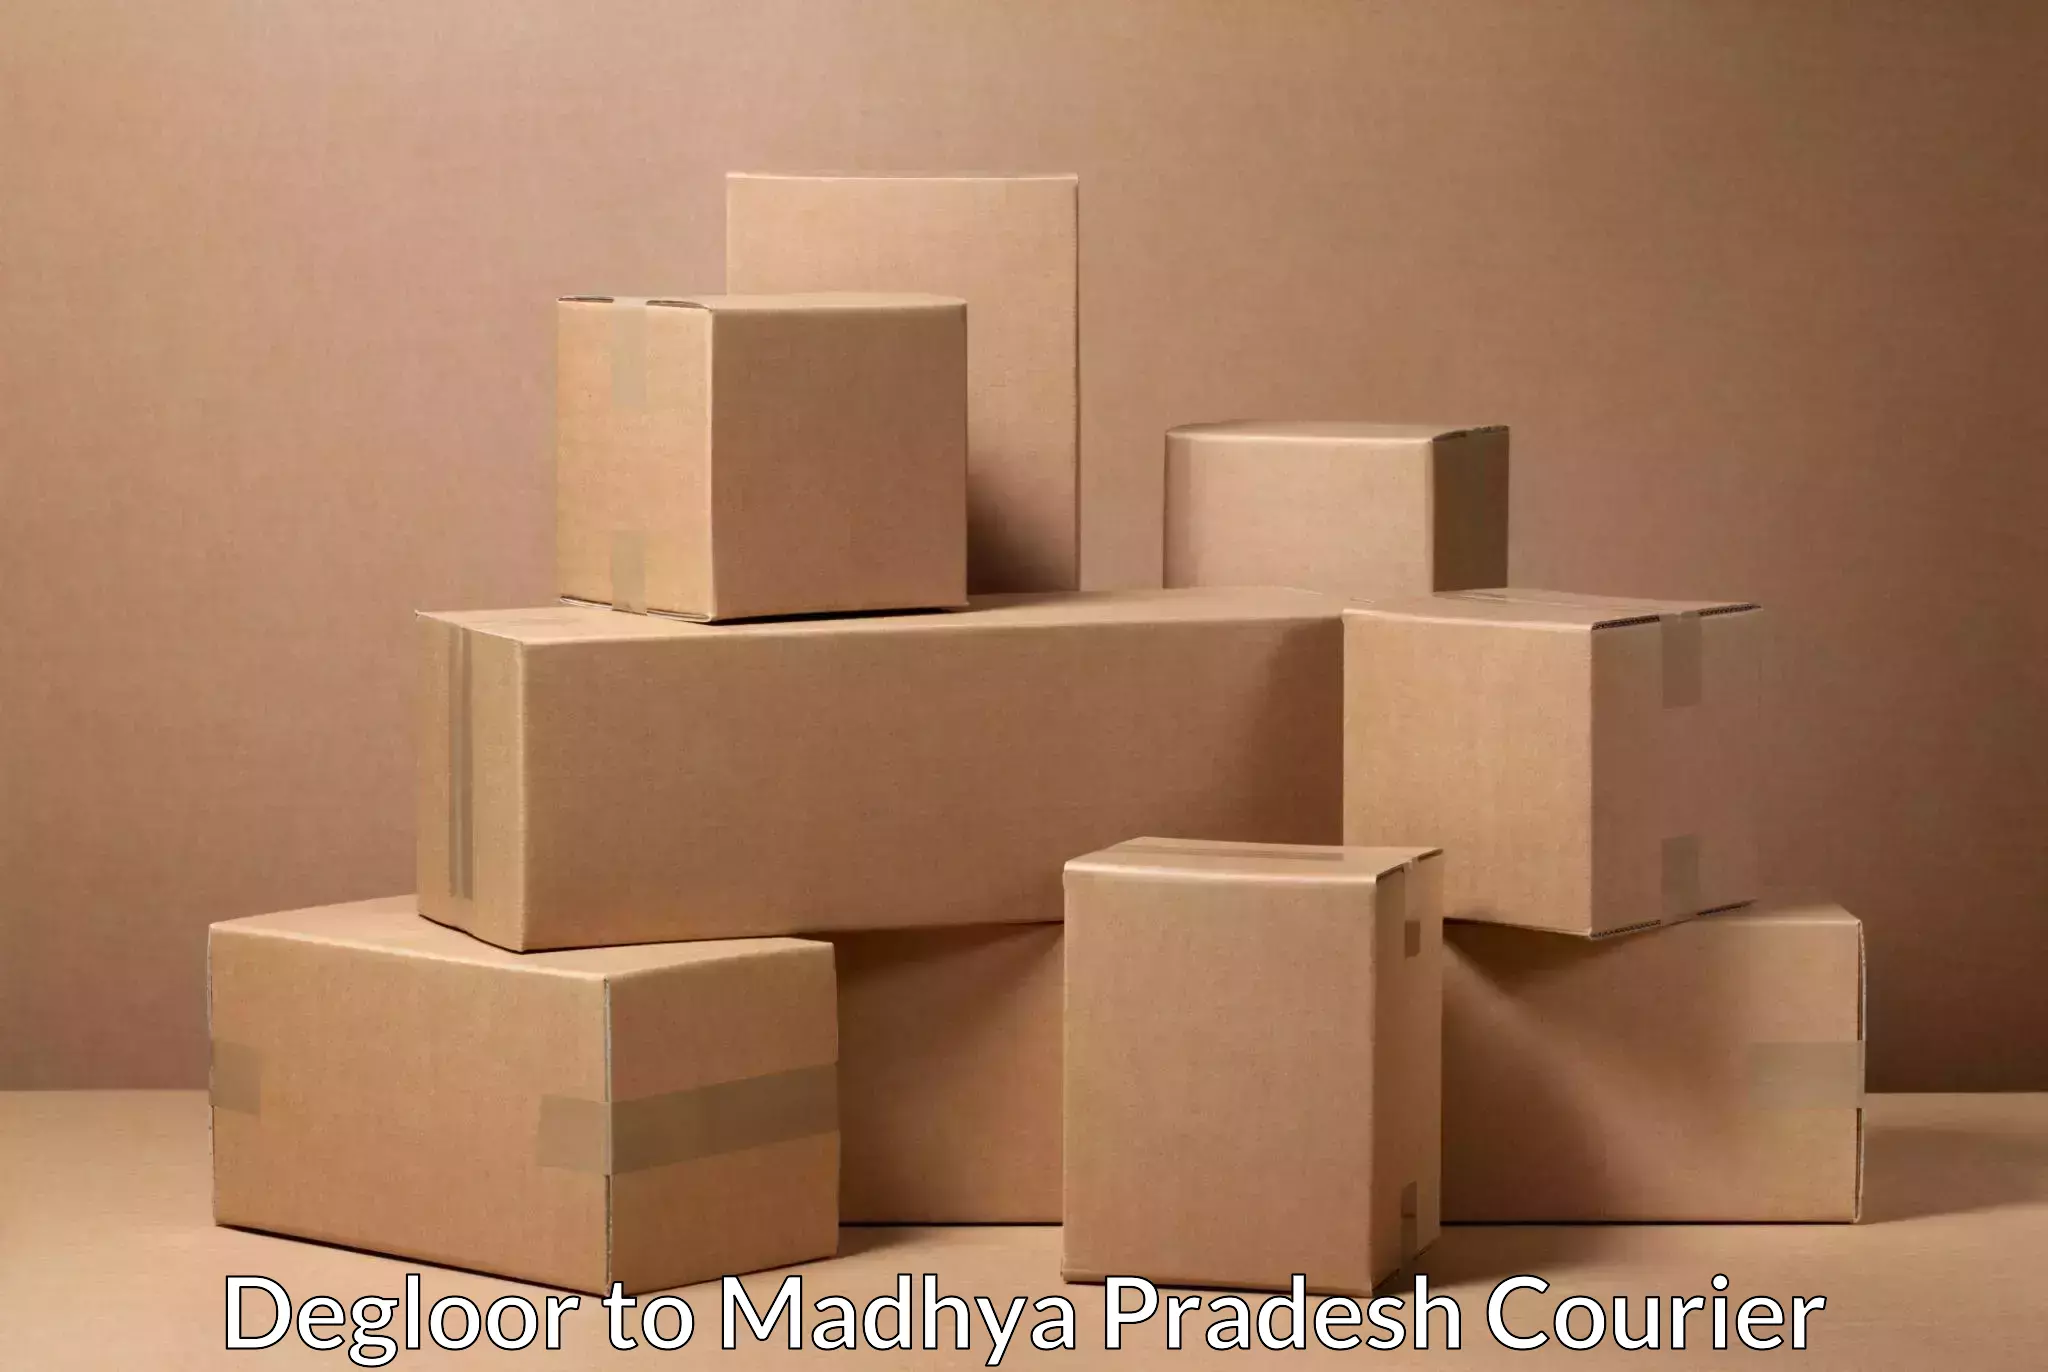 Cargo courier service Degloor to Madhya Pradesh